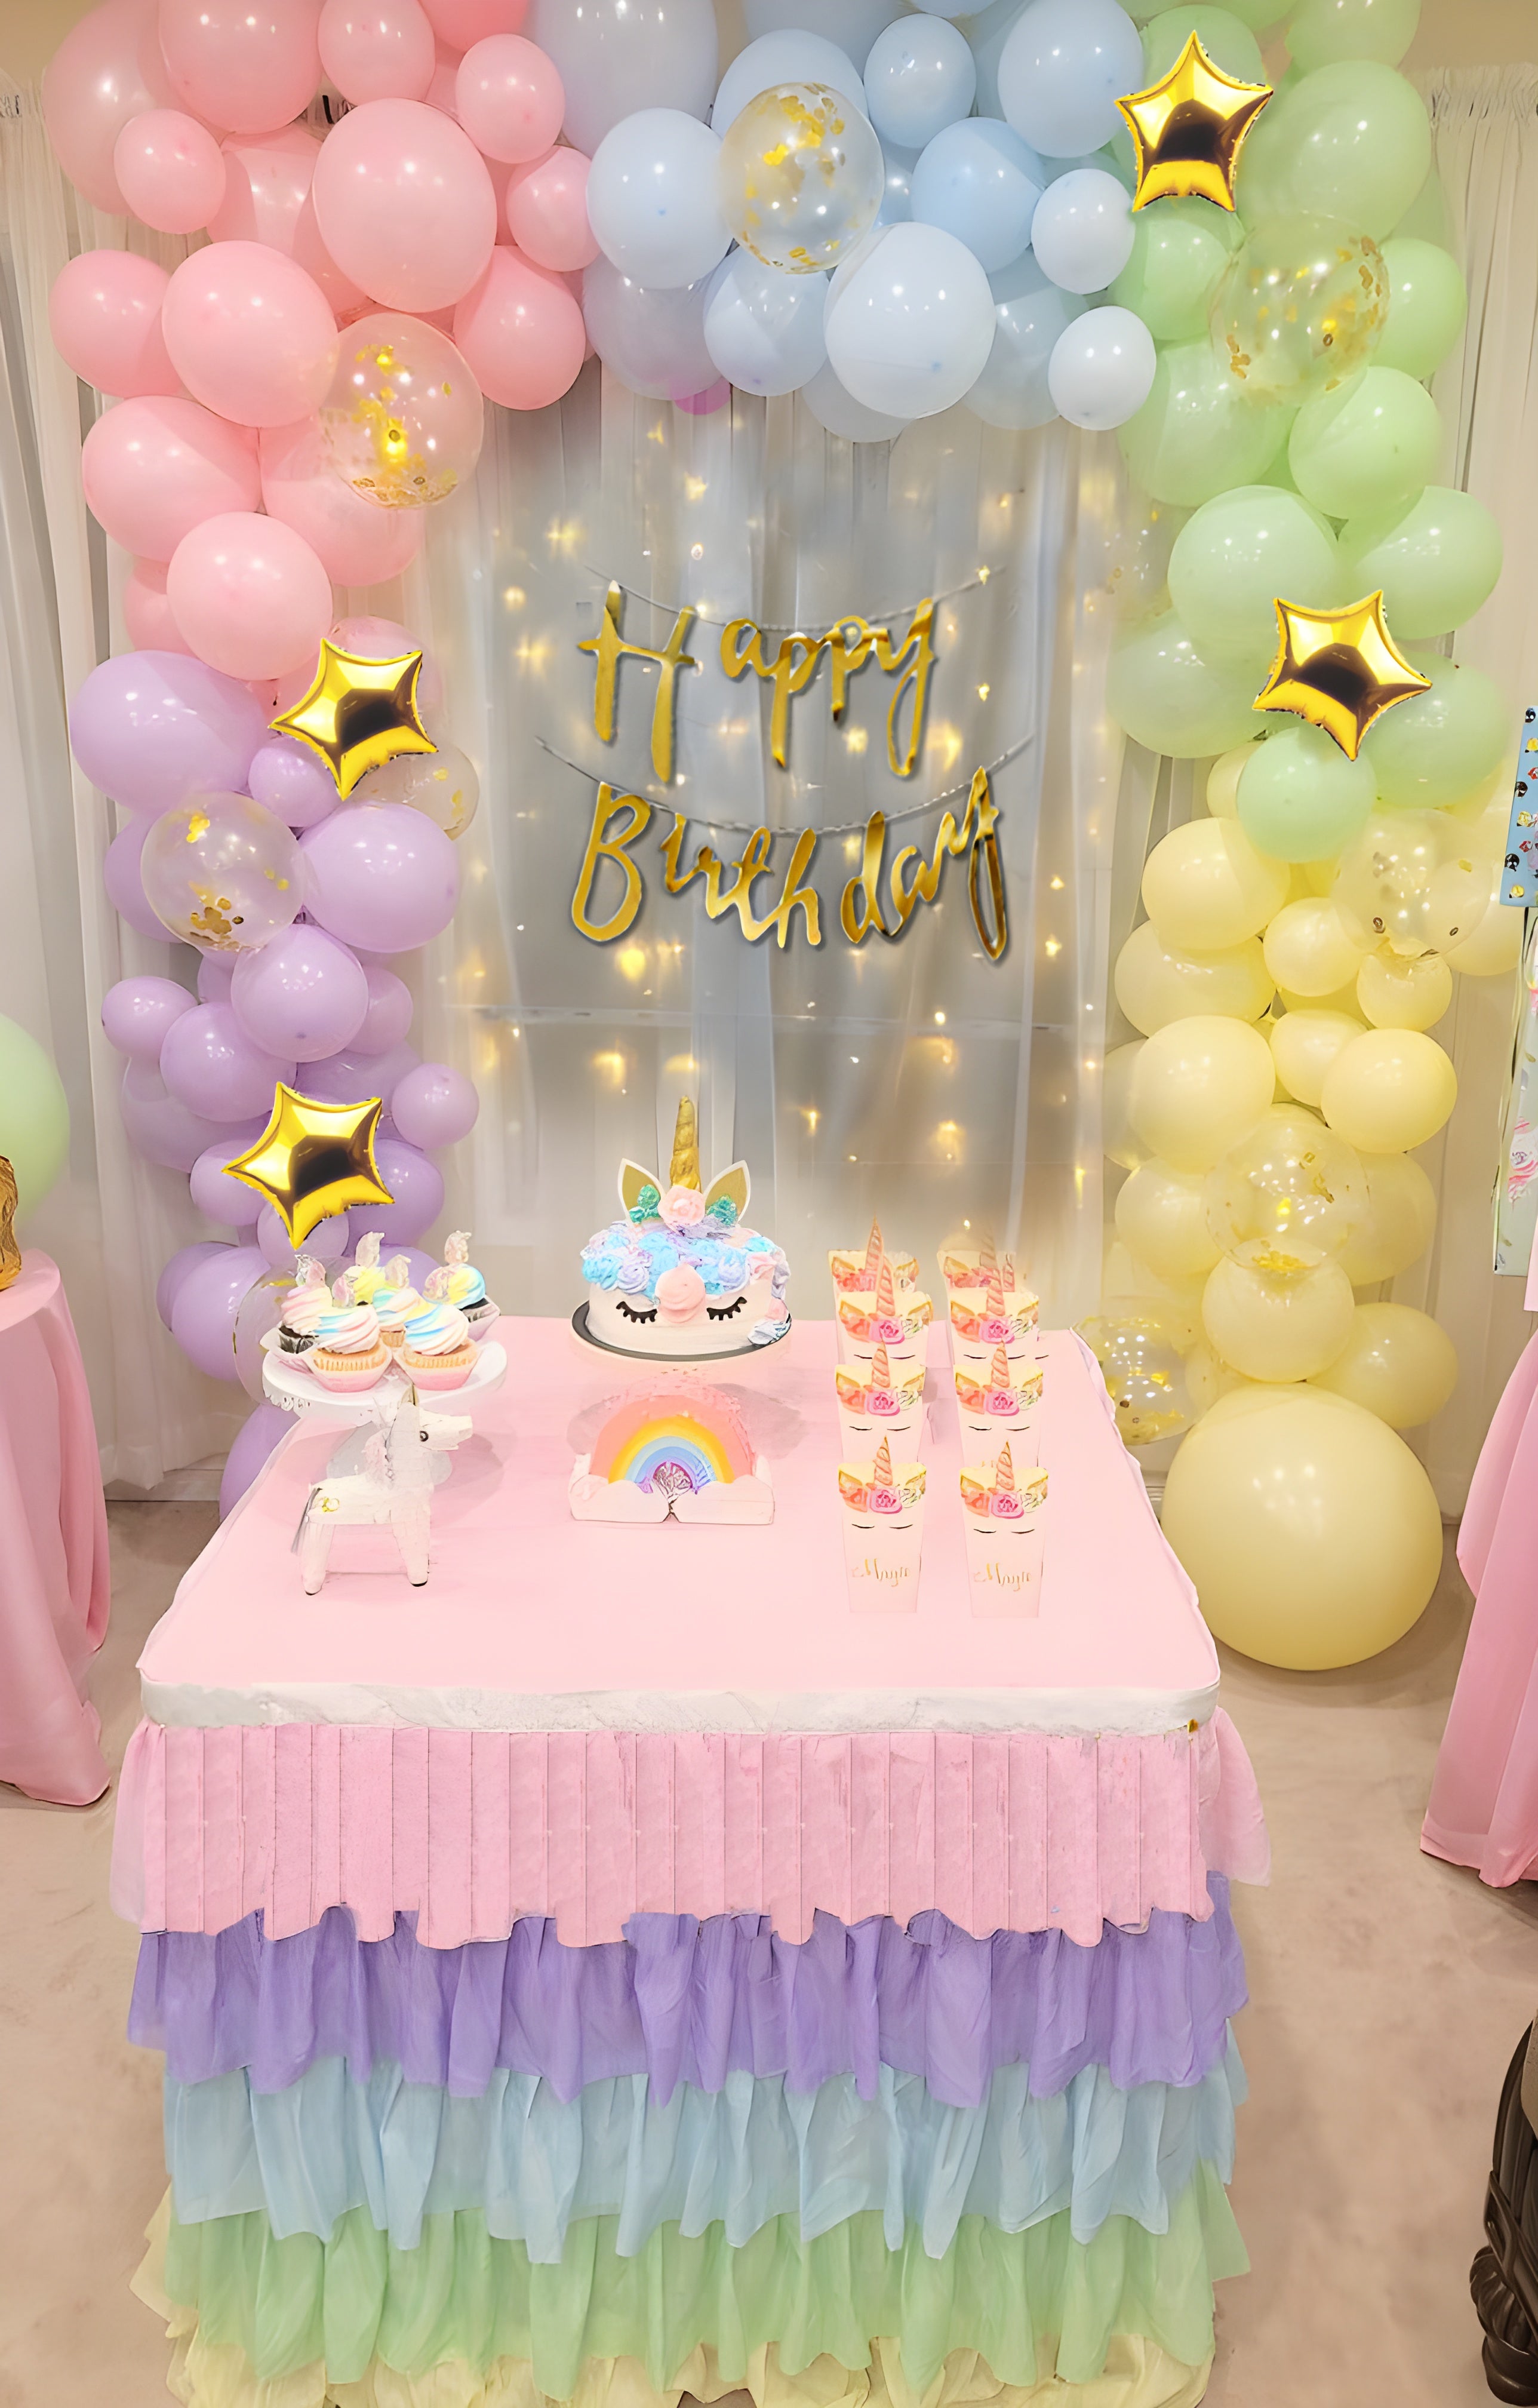 Pastel rainbow balloons for happy birthday decoration items